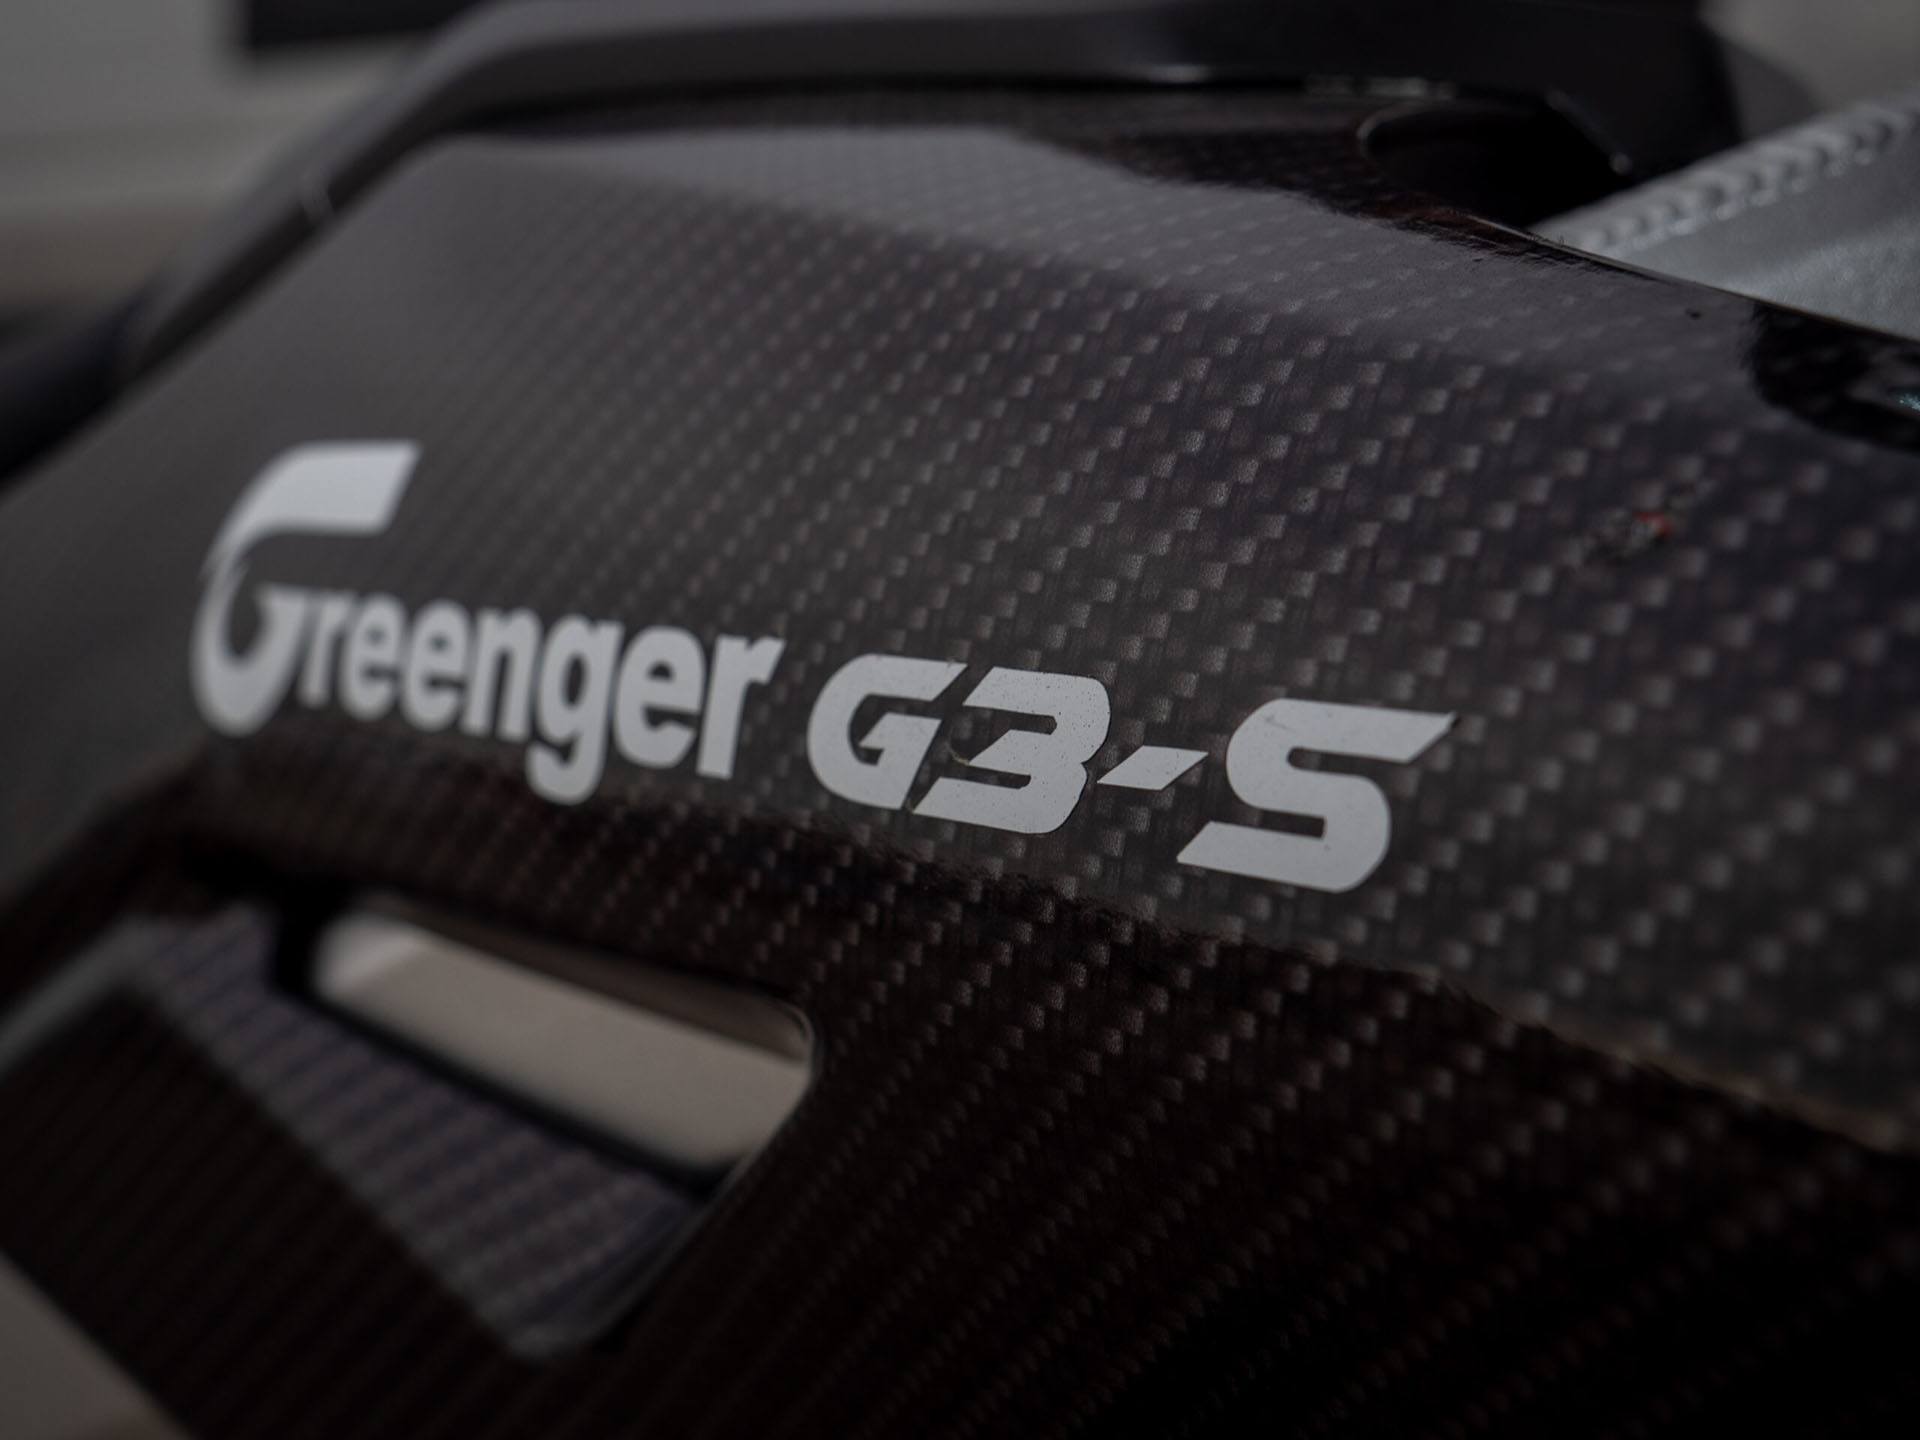 2023 Greenger Powersports G3S in Santa Rosa, California - Photo 4